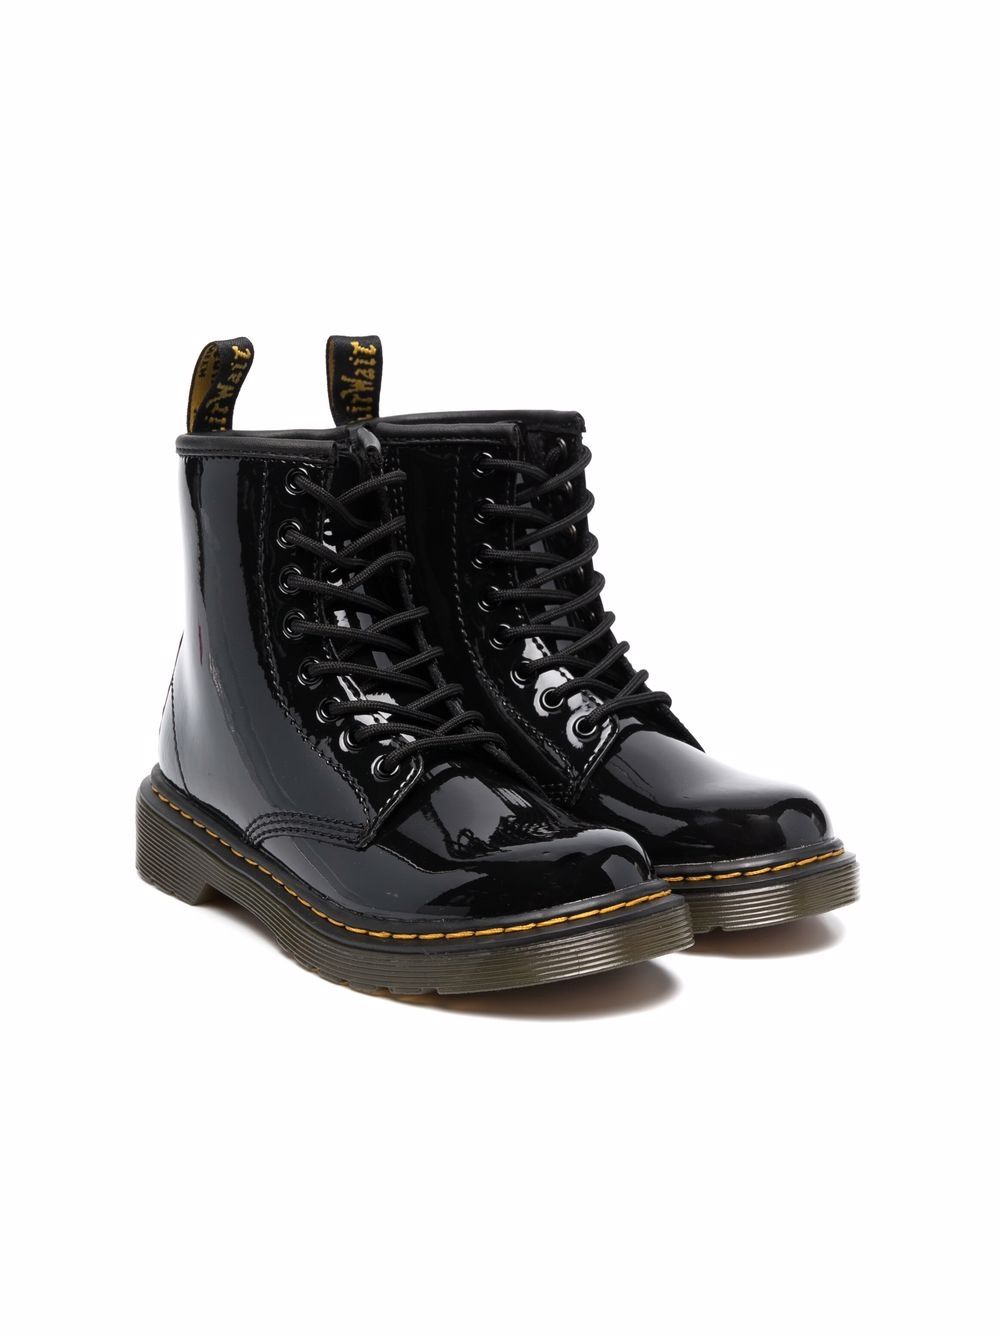 Dr. Martens Kids 1460 patent leather boots - Black von Dr. Martens Kids